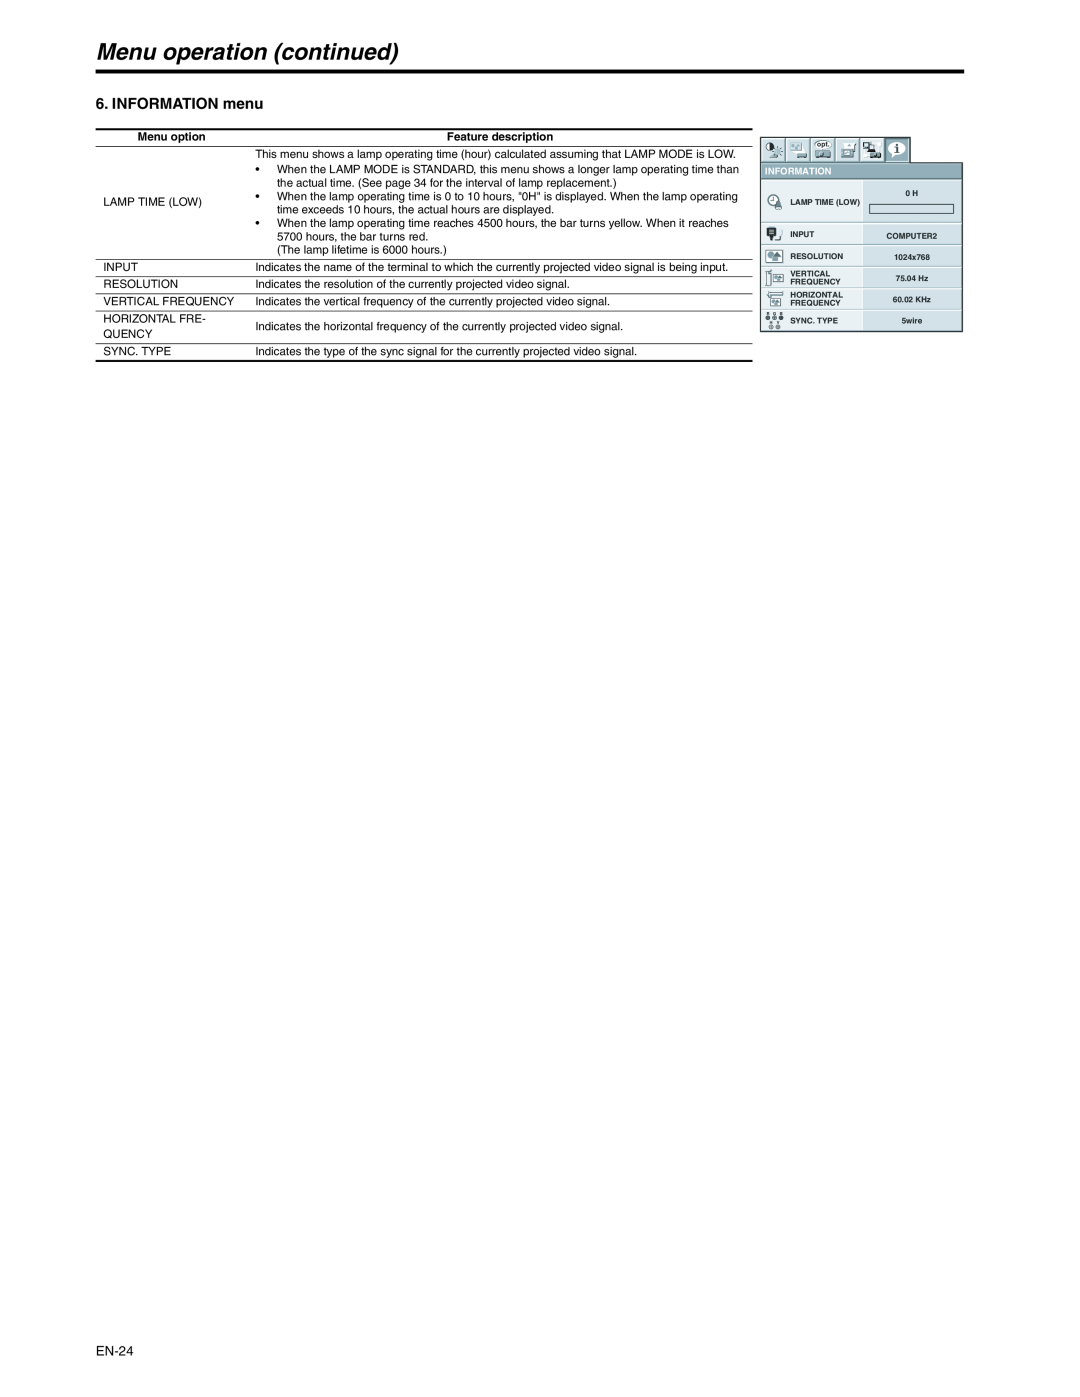 Mitsubishi Electronics XD250U-ST user manual INFORMATION menu, Menu operation continued, EN-24 